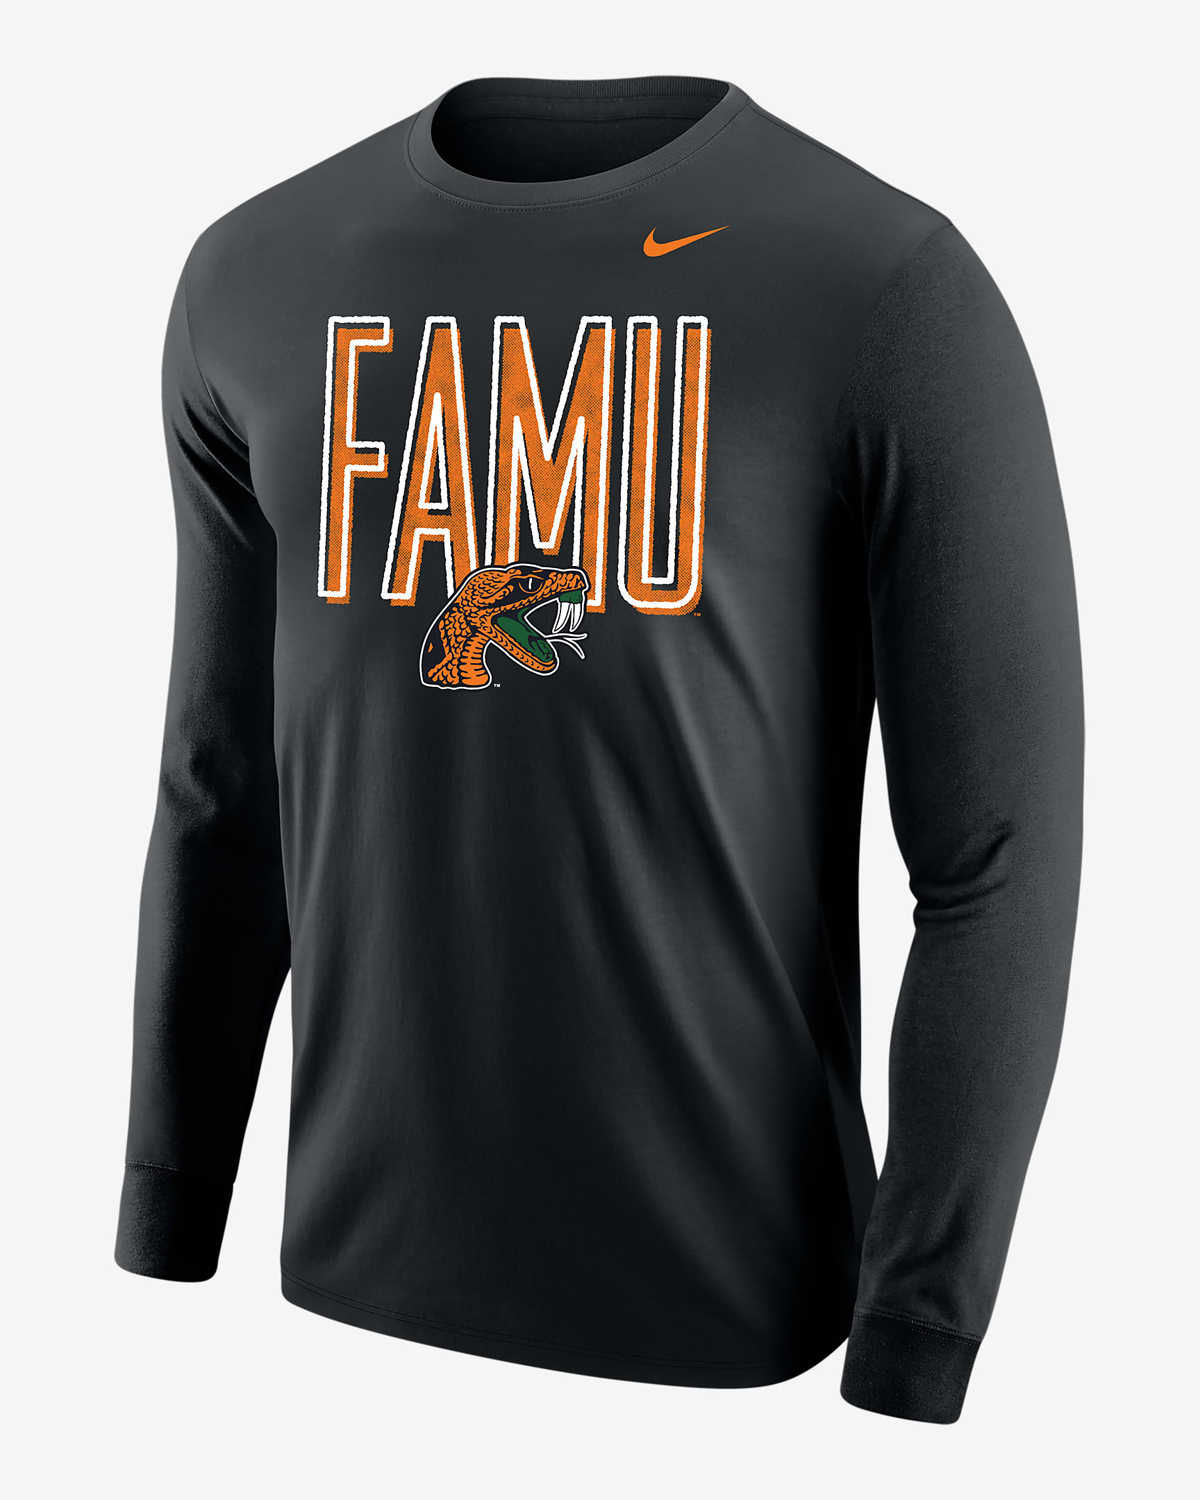 Nike-FAMU-Florida-AM-Rattlers-Long-Sleeve-T-Shirt